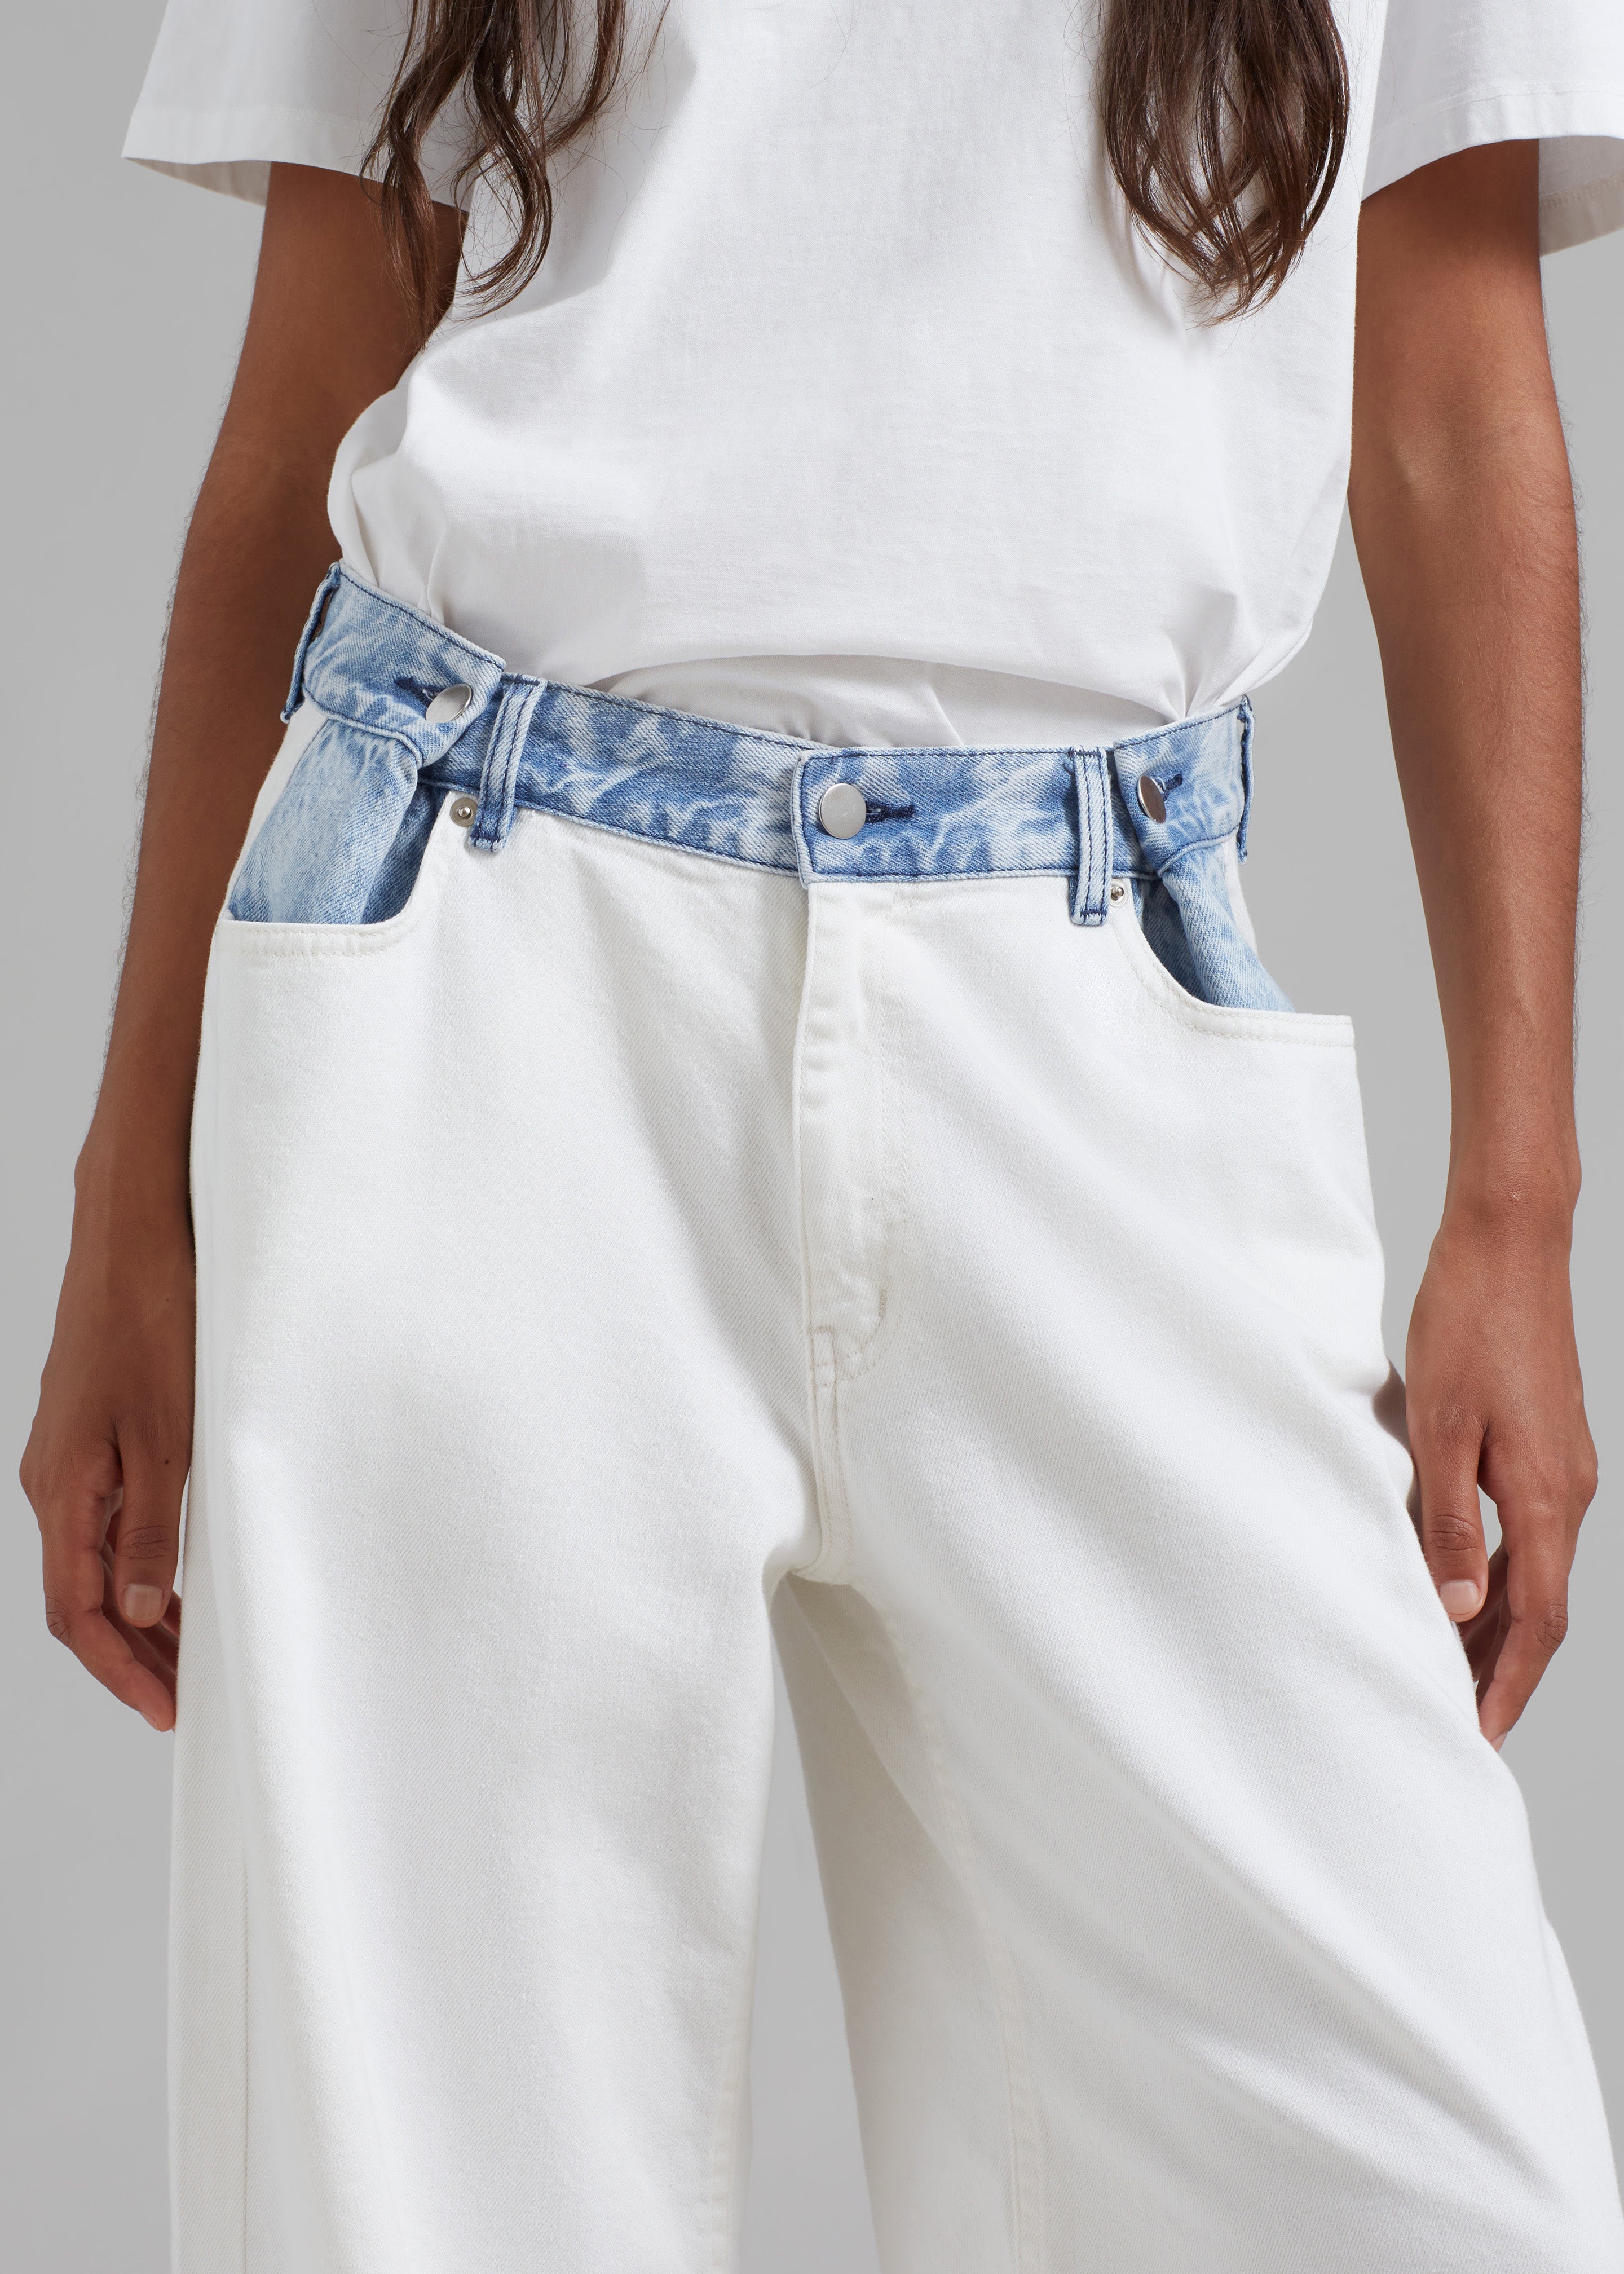 Hayla Contrast Denim Pants - Off White/Blue - 8